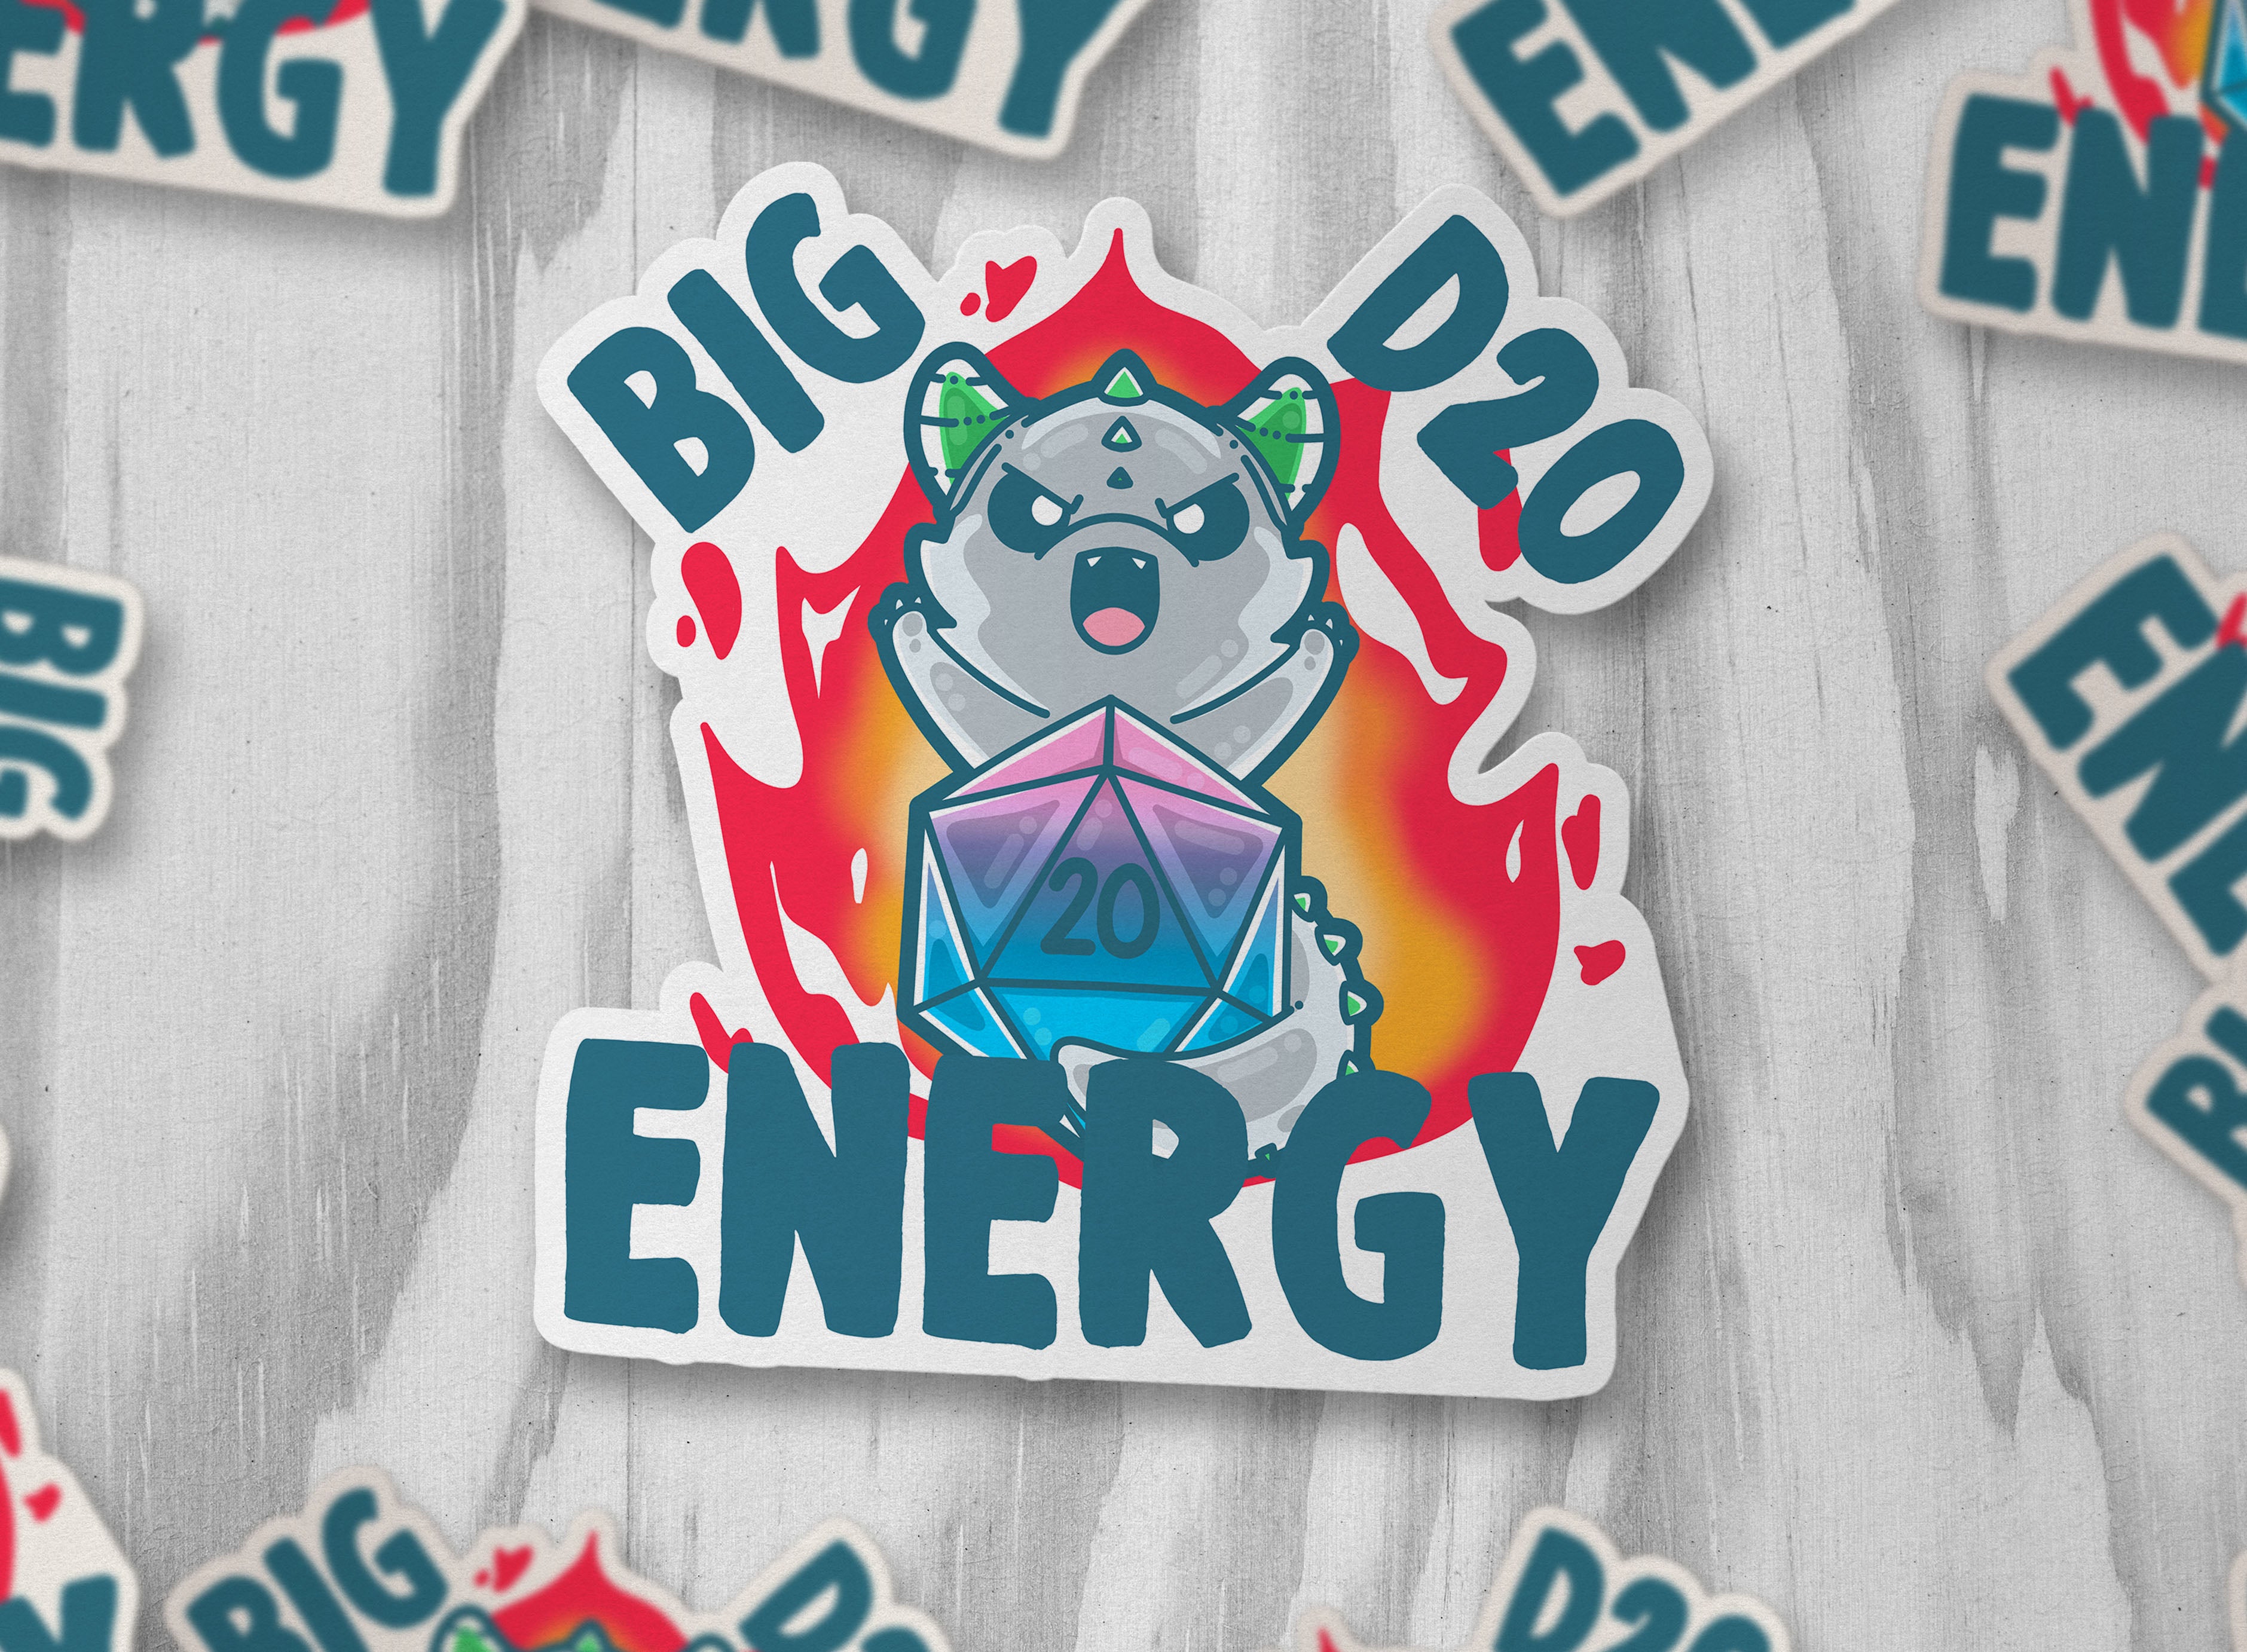 Big D20 Energy - ChubbleGumLLC